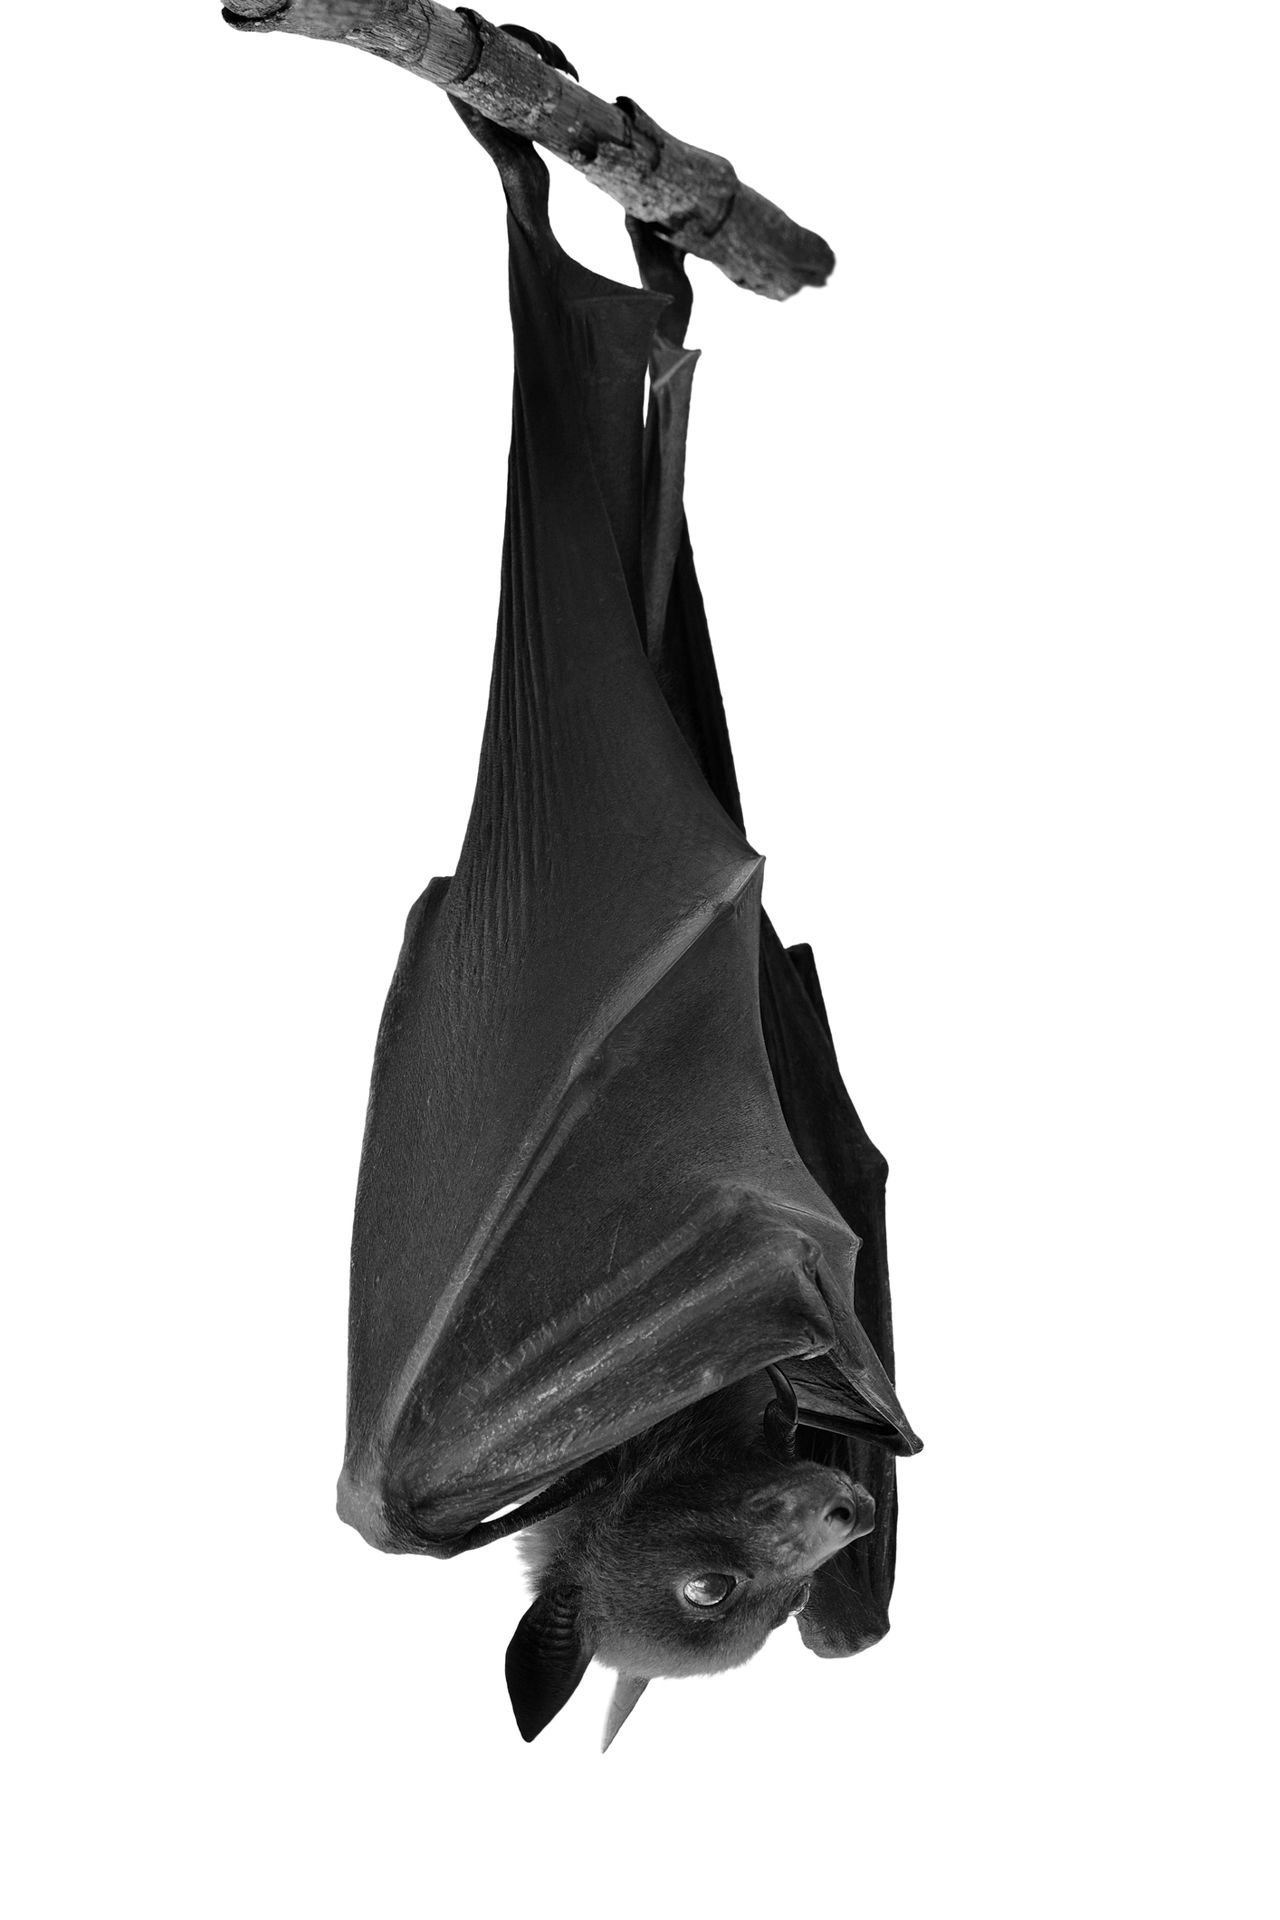 List of Different Types of Bats - Animal Sake